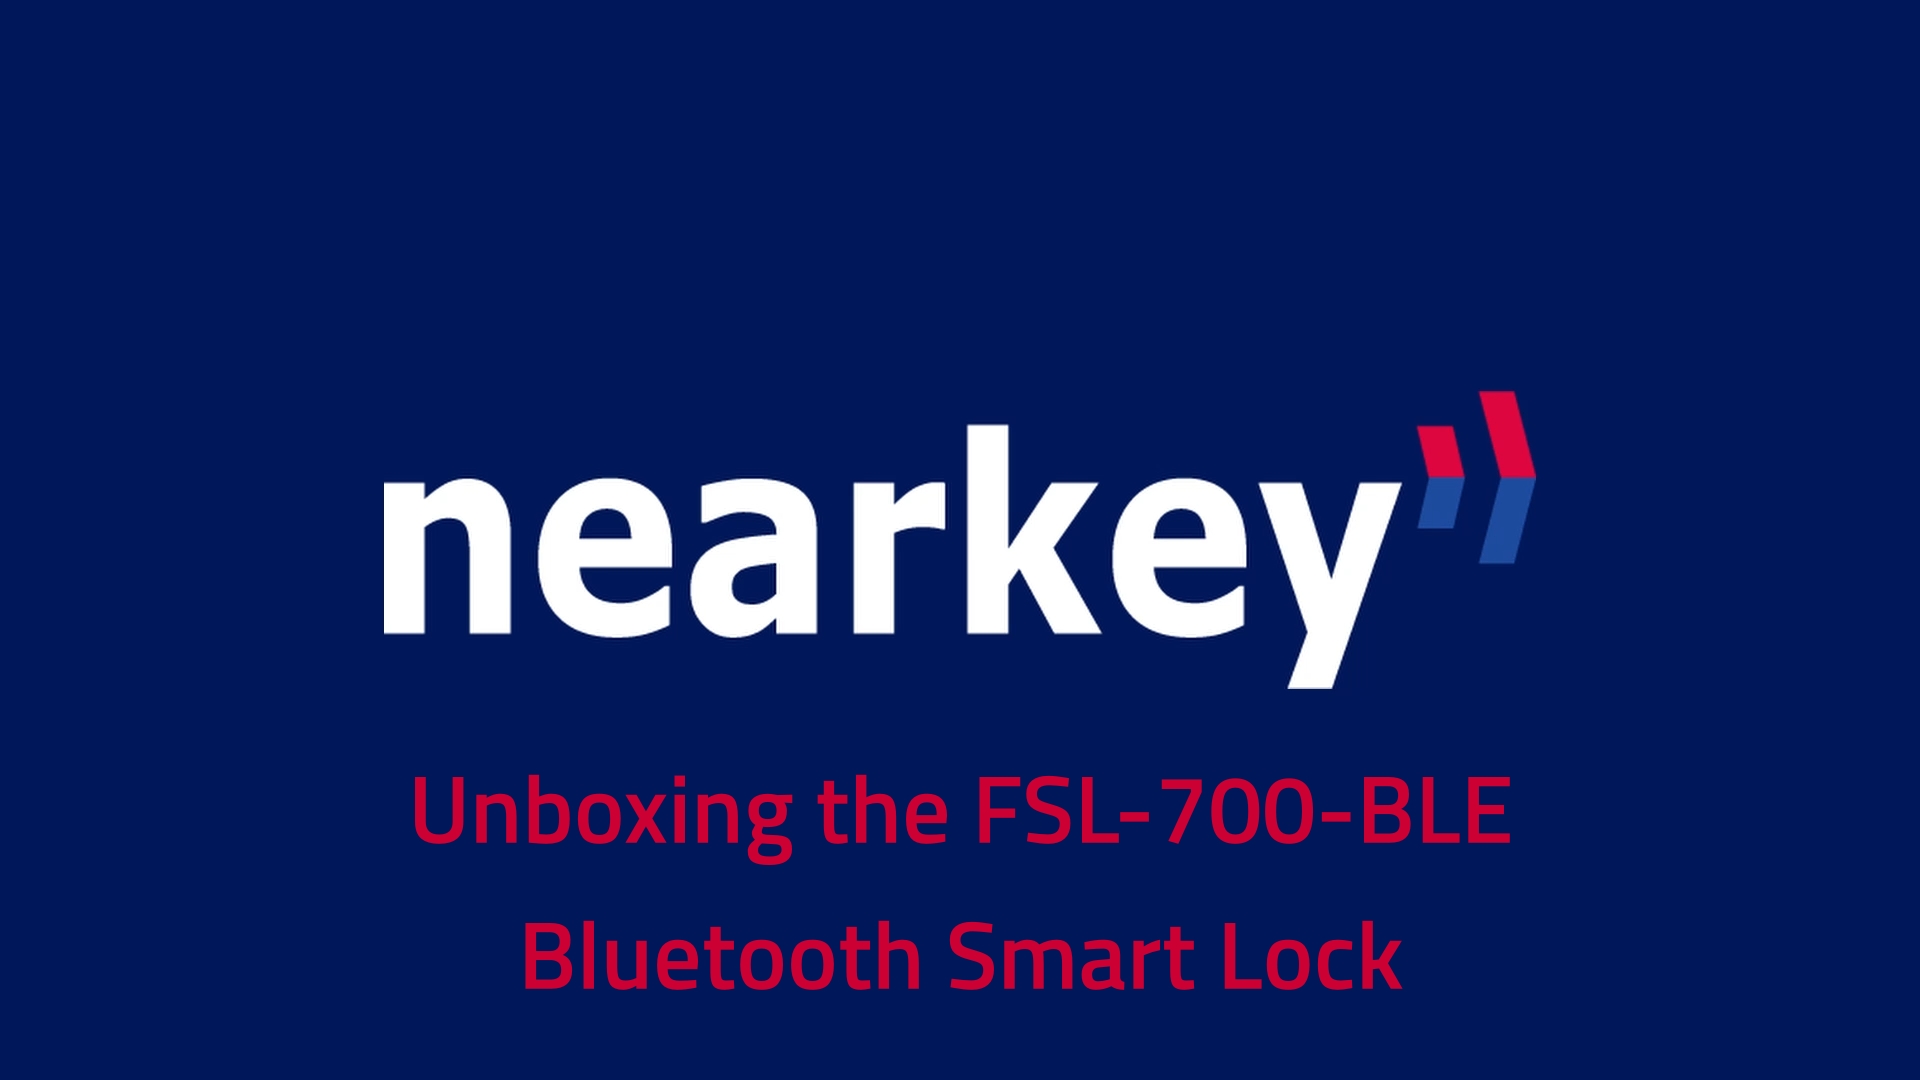 nearkey - unboxing the FSL-700-BLE